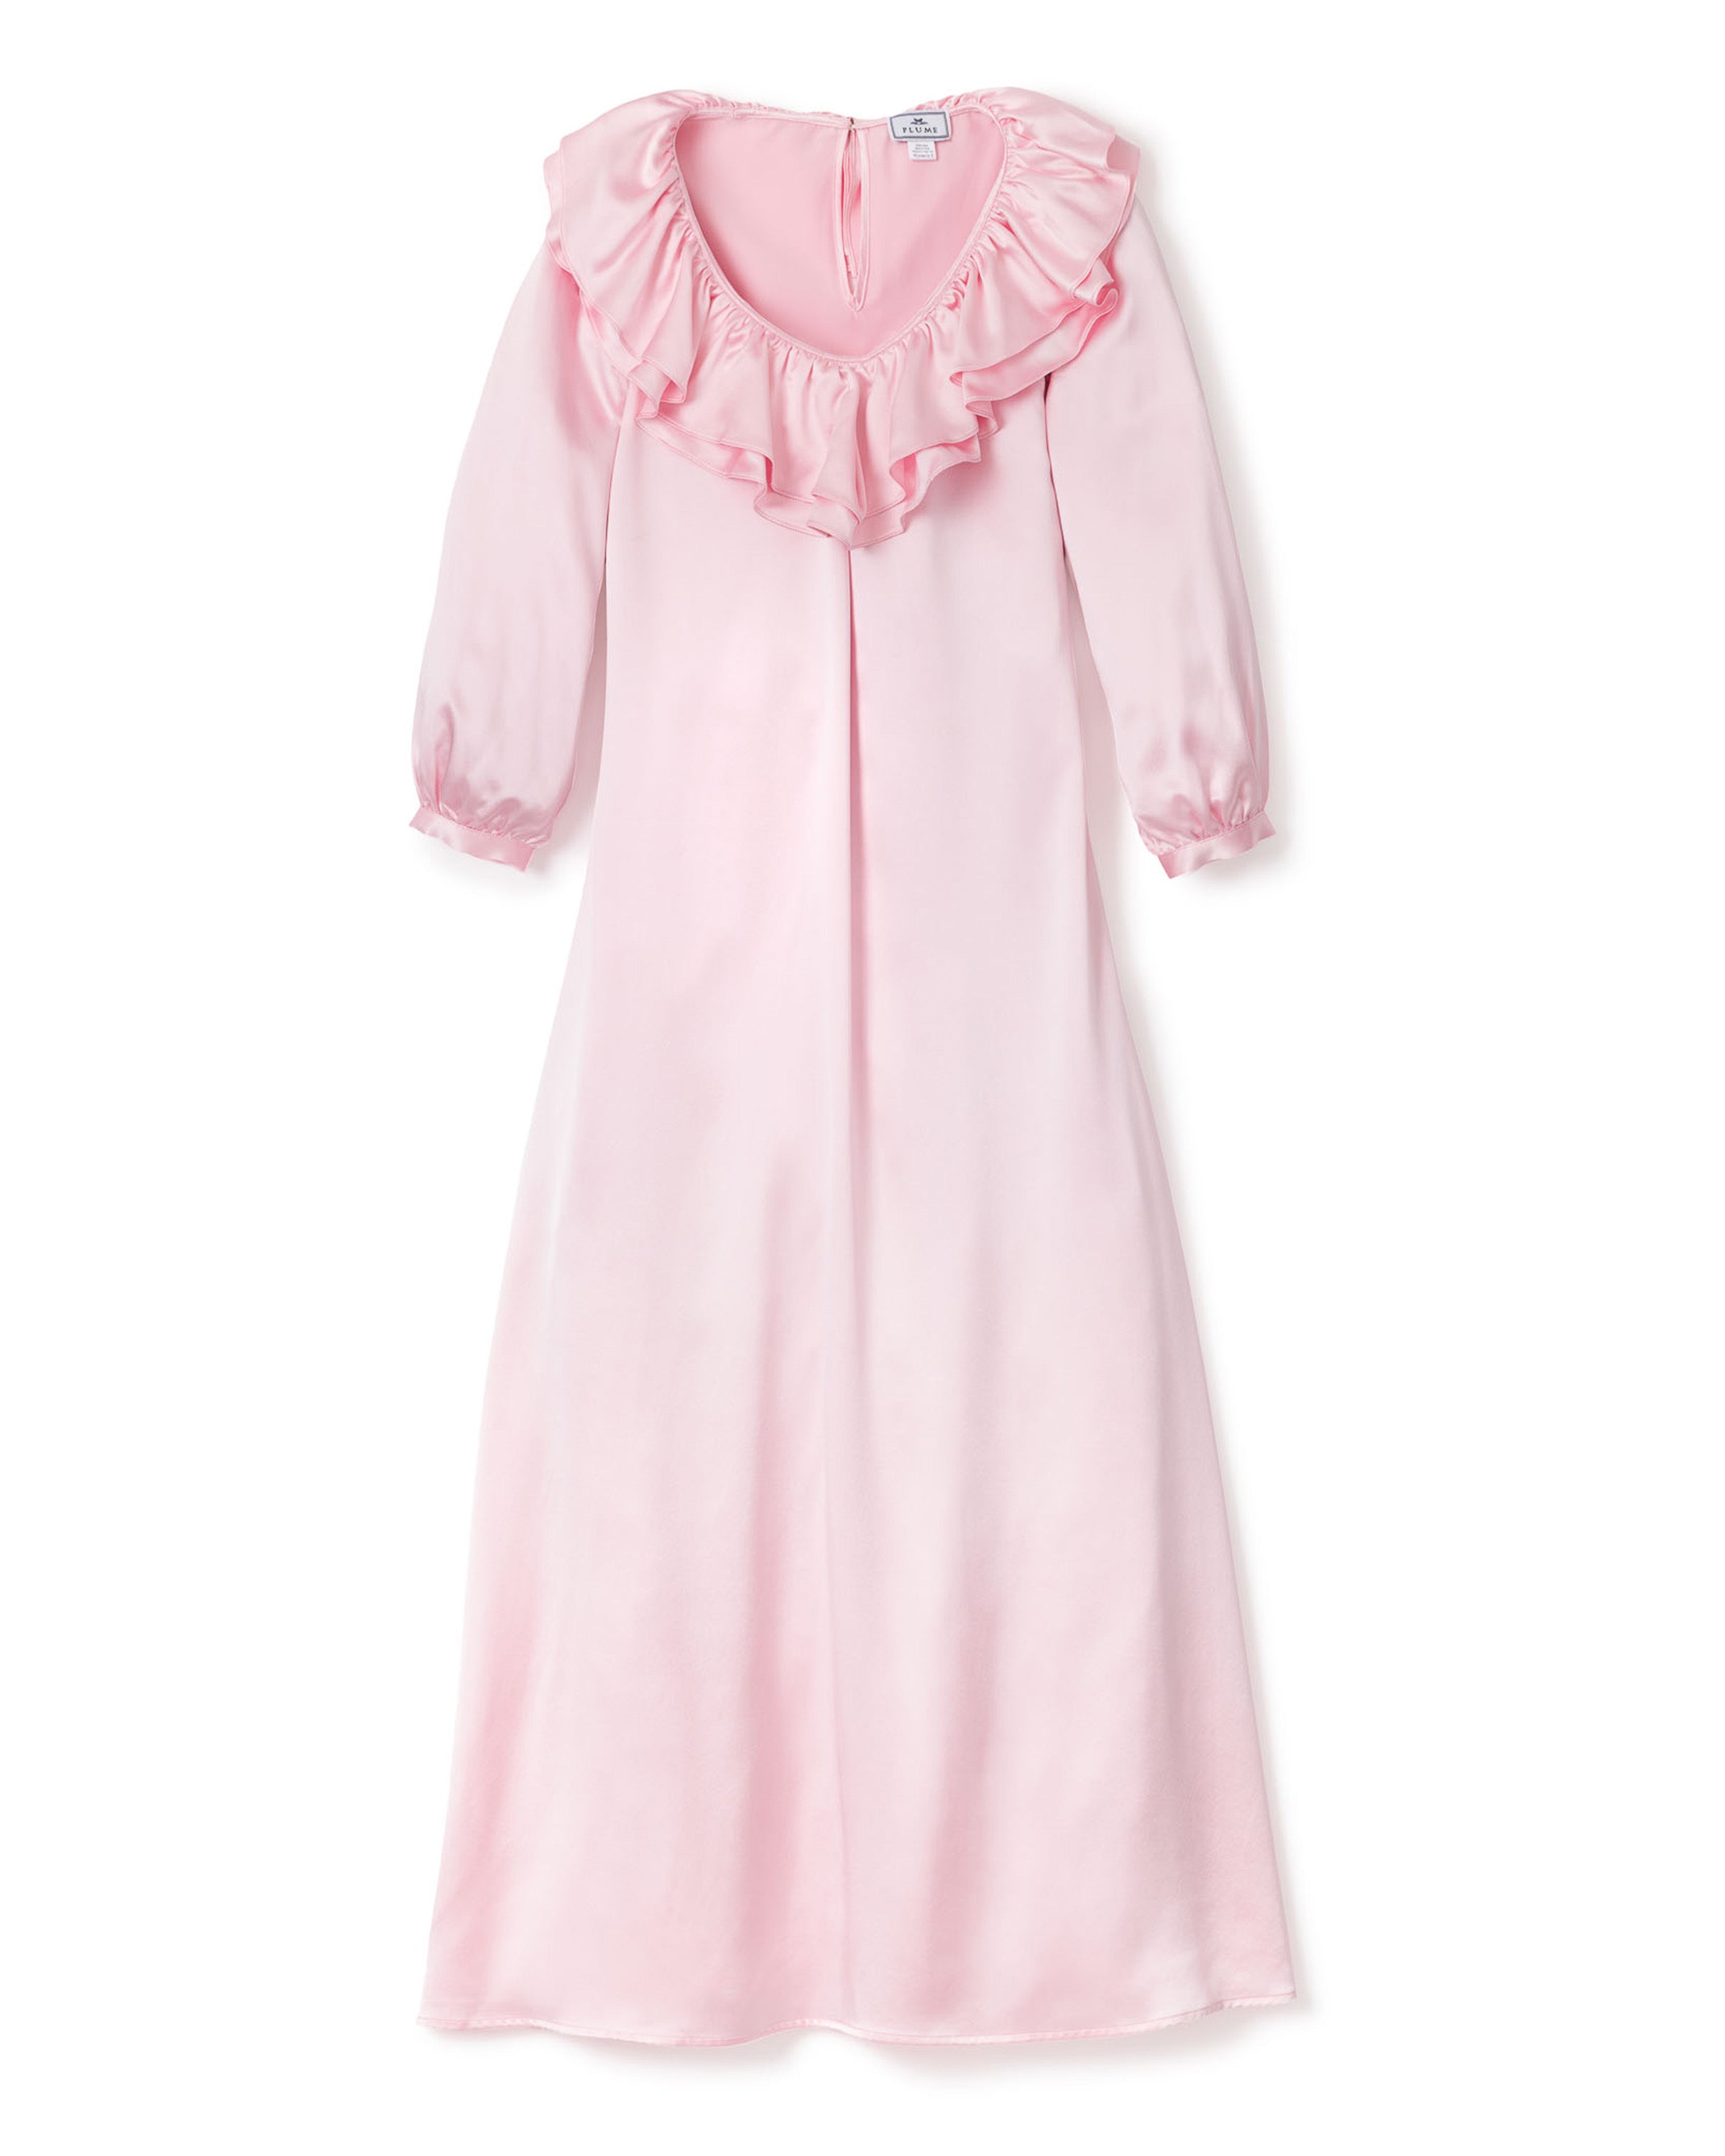 Women's Silk Anastasia Nightgown in Pink